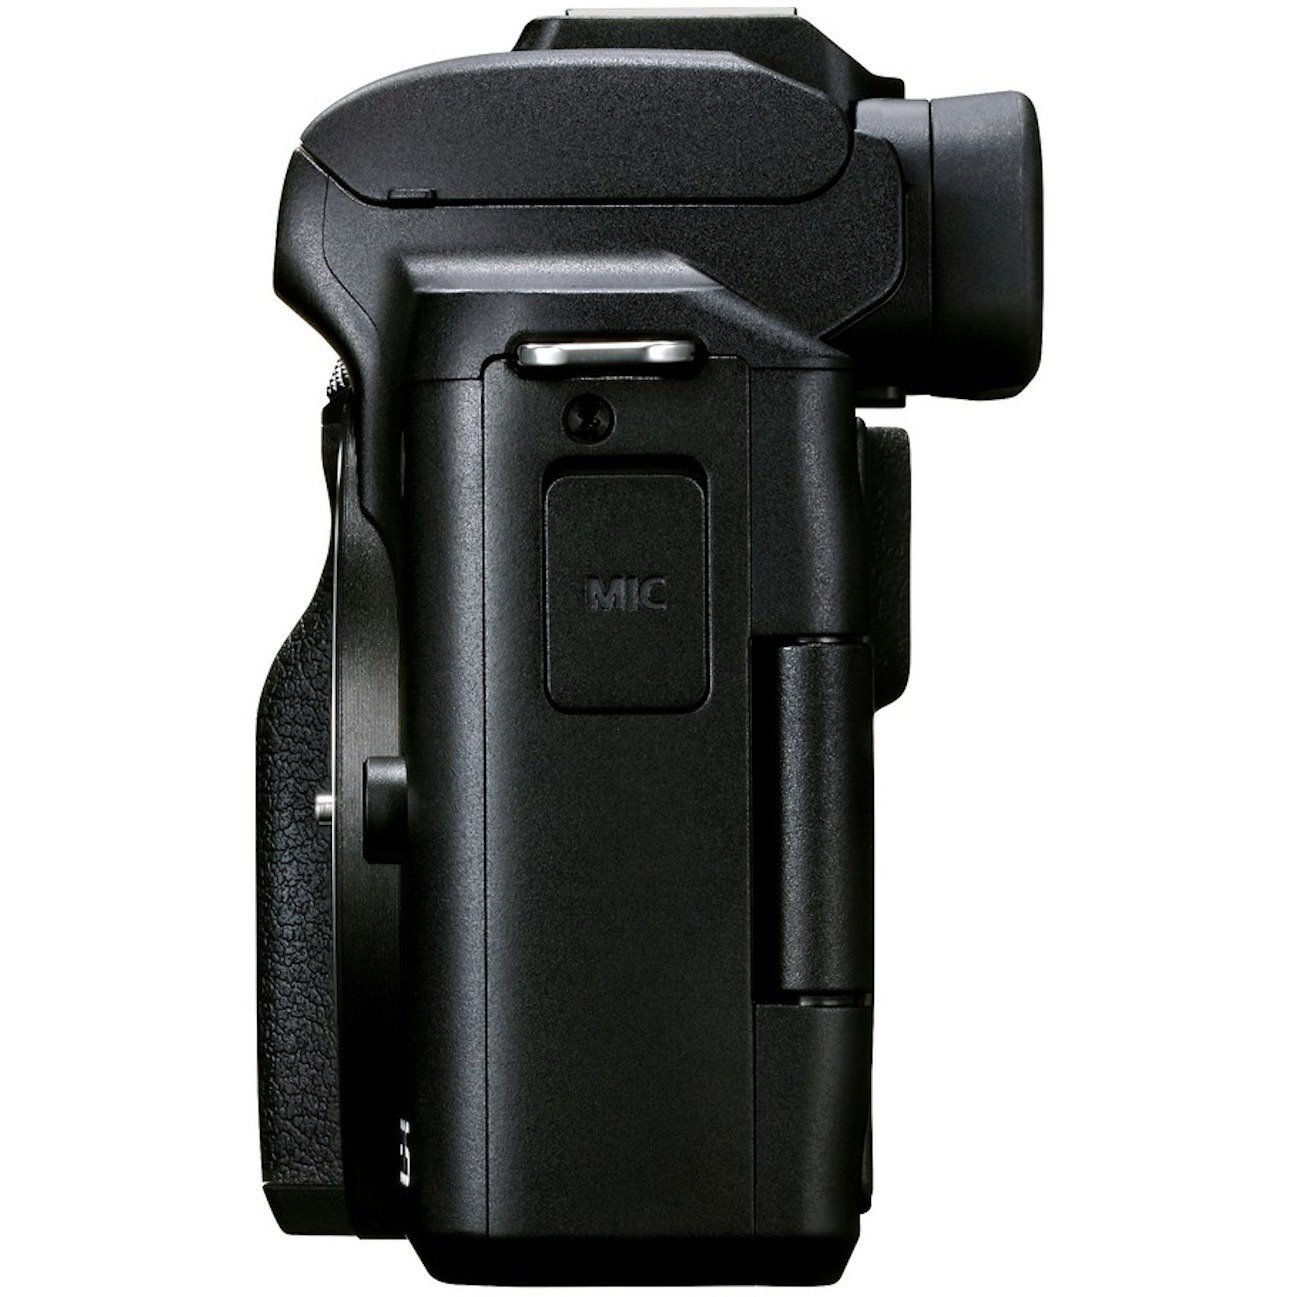 Canon EOS M50 Mark II 24.1 Megapixel Digital SLR Camera Body Only - Black